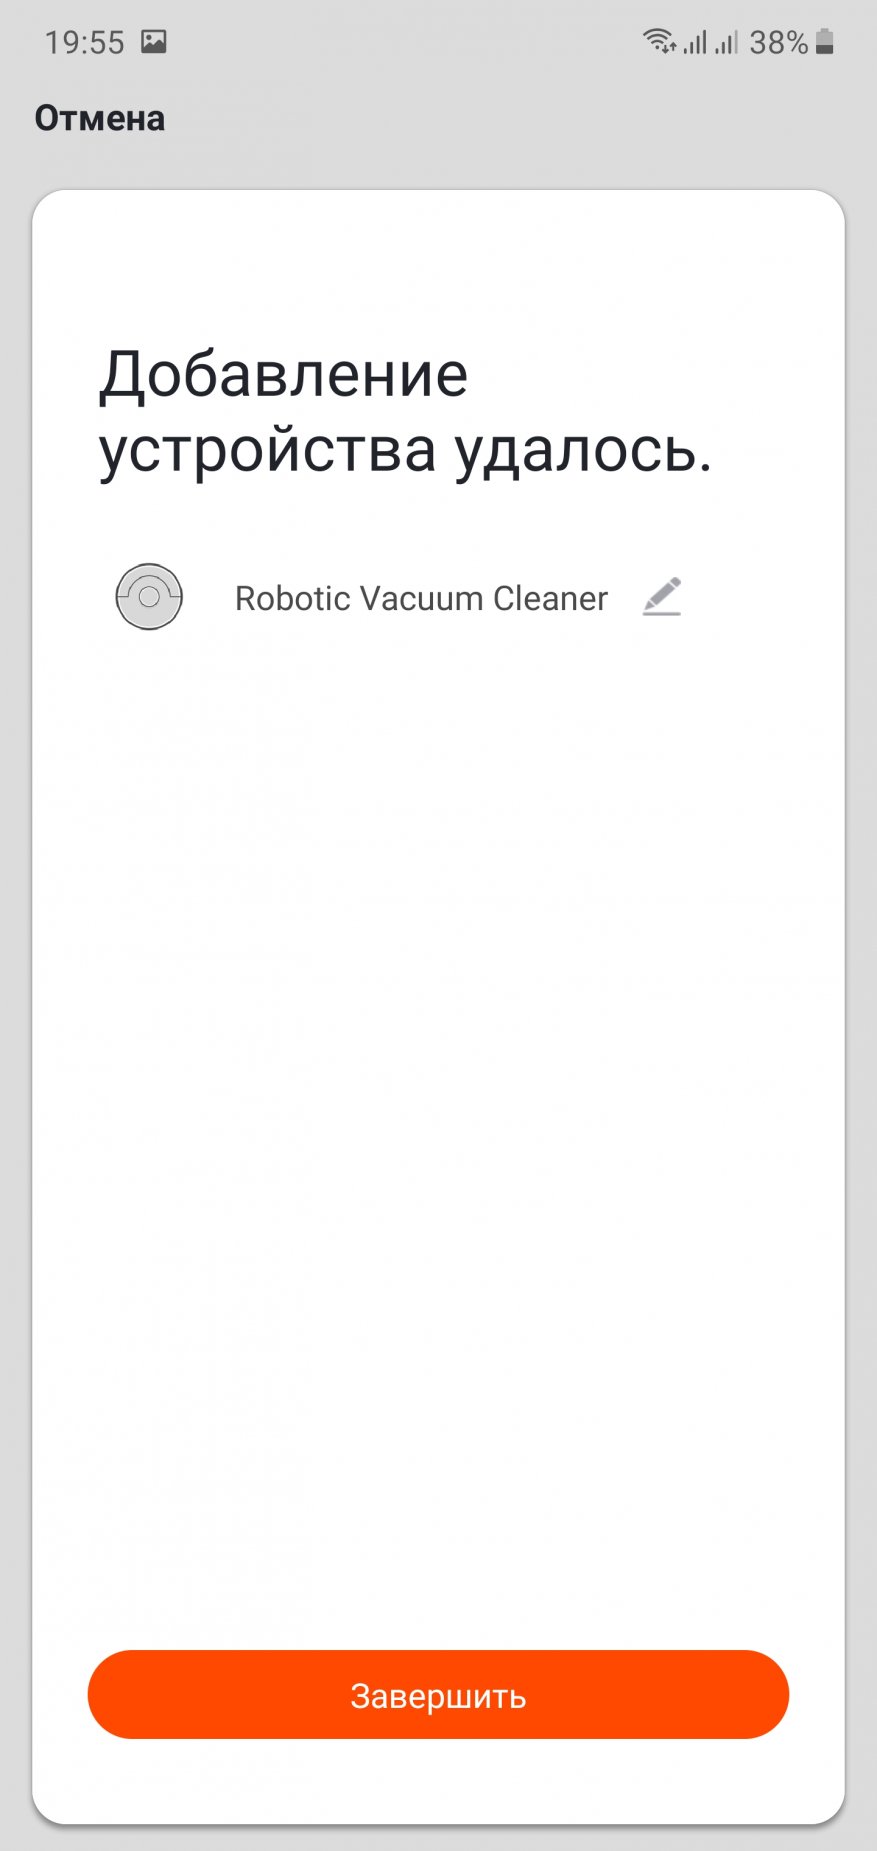 Modern Robot Vacuum Cleaner Liectroux B6009: upprätthålla renheten 53